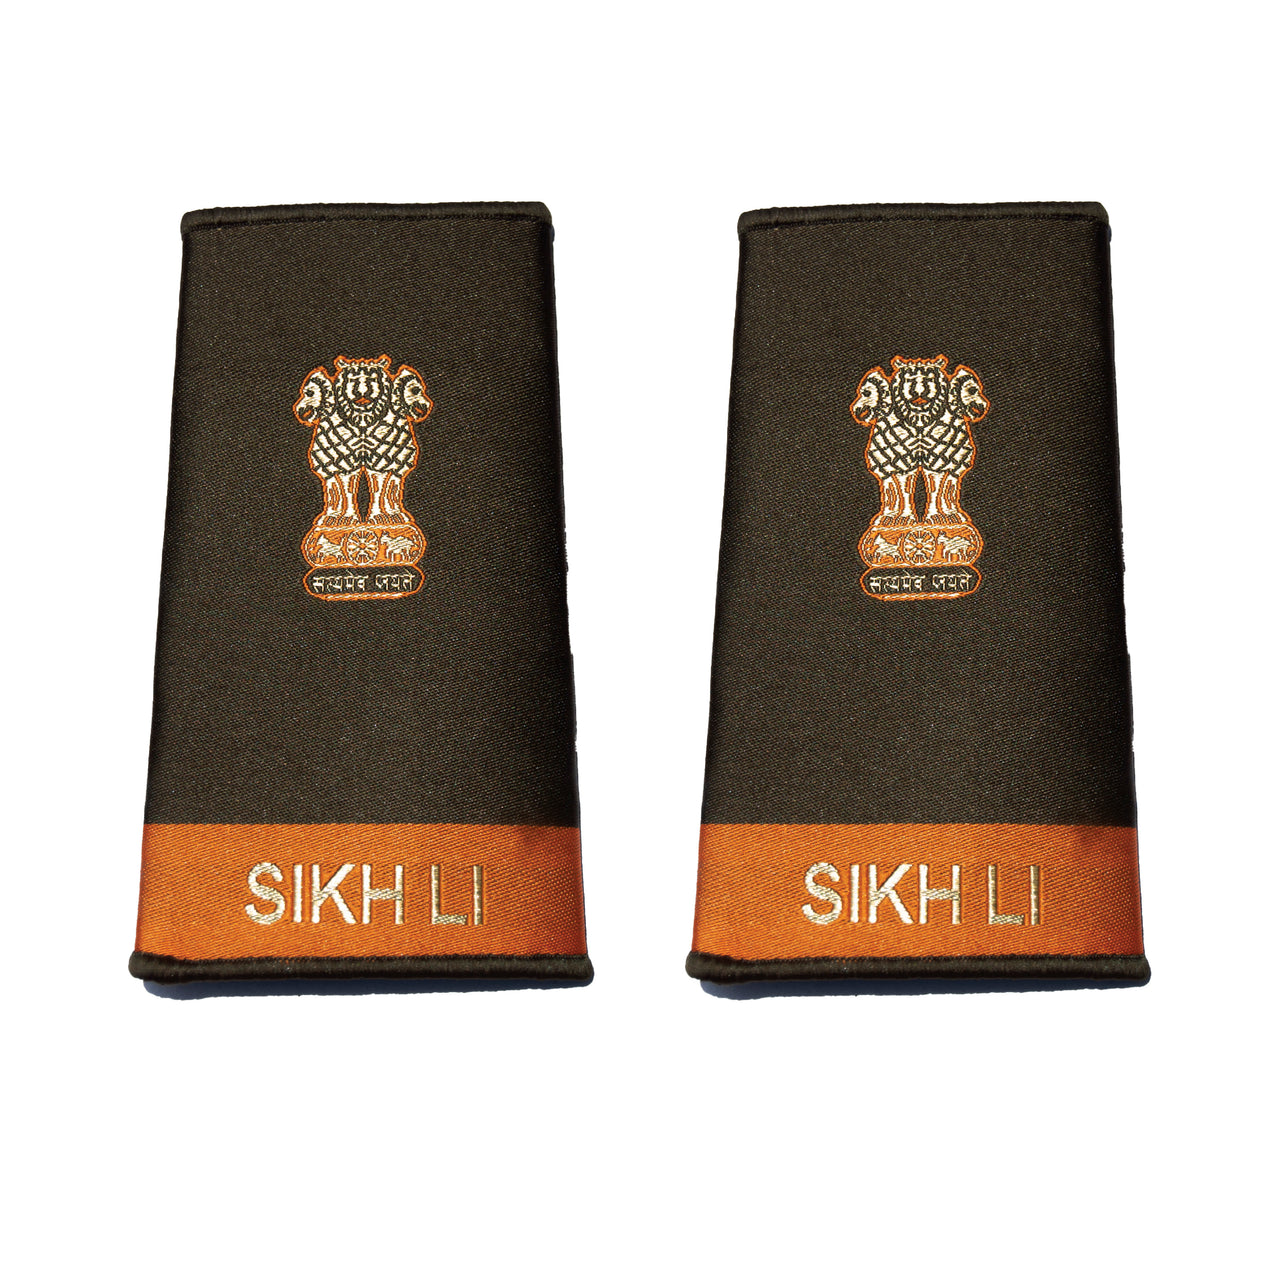 Indian Army Rank Epaulettes - Sikh Light Infantry